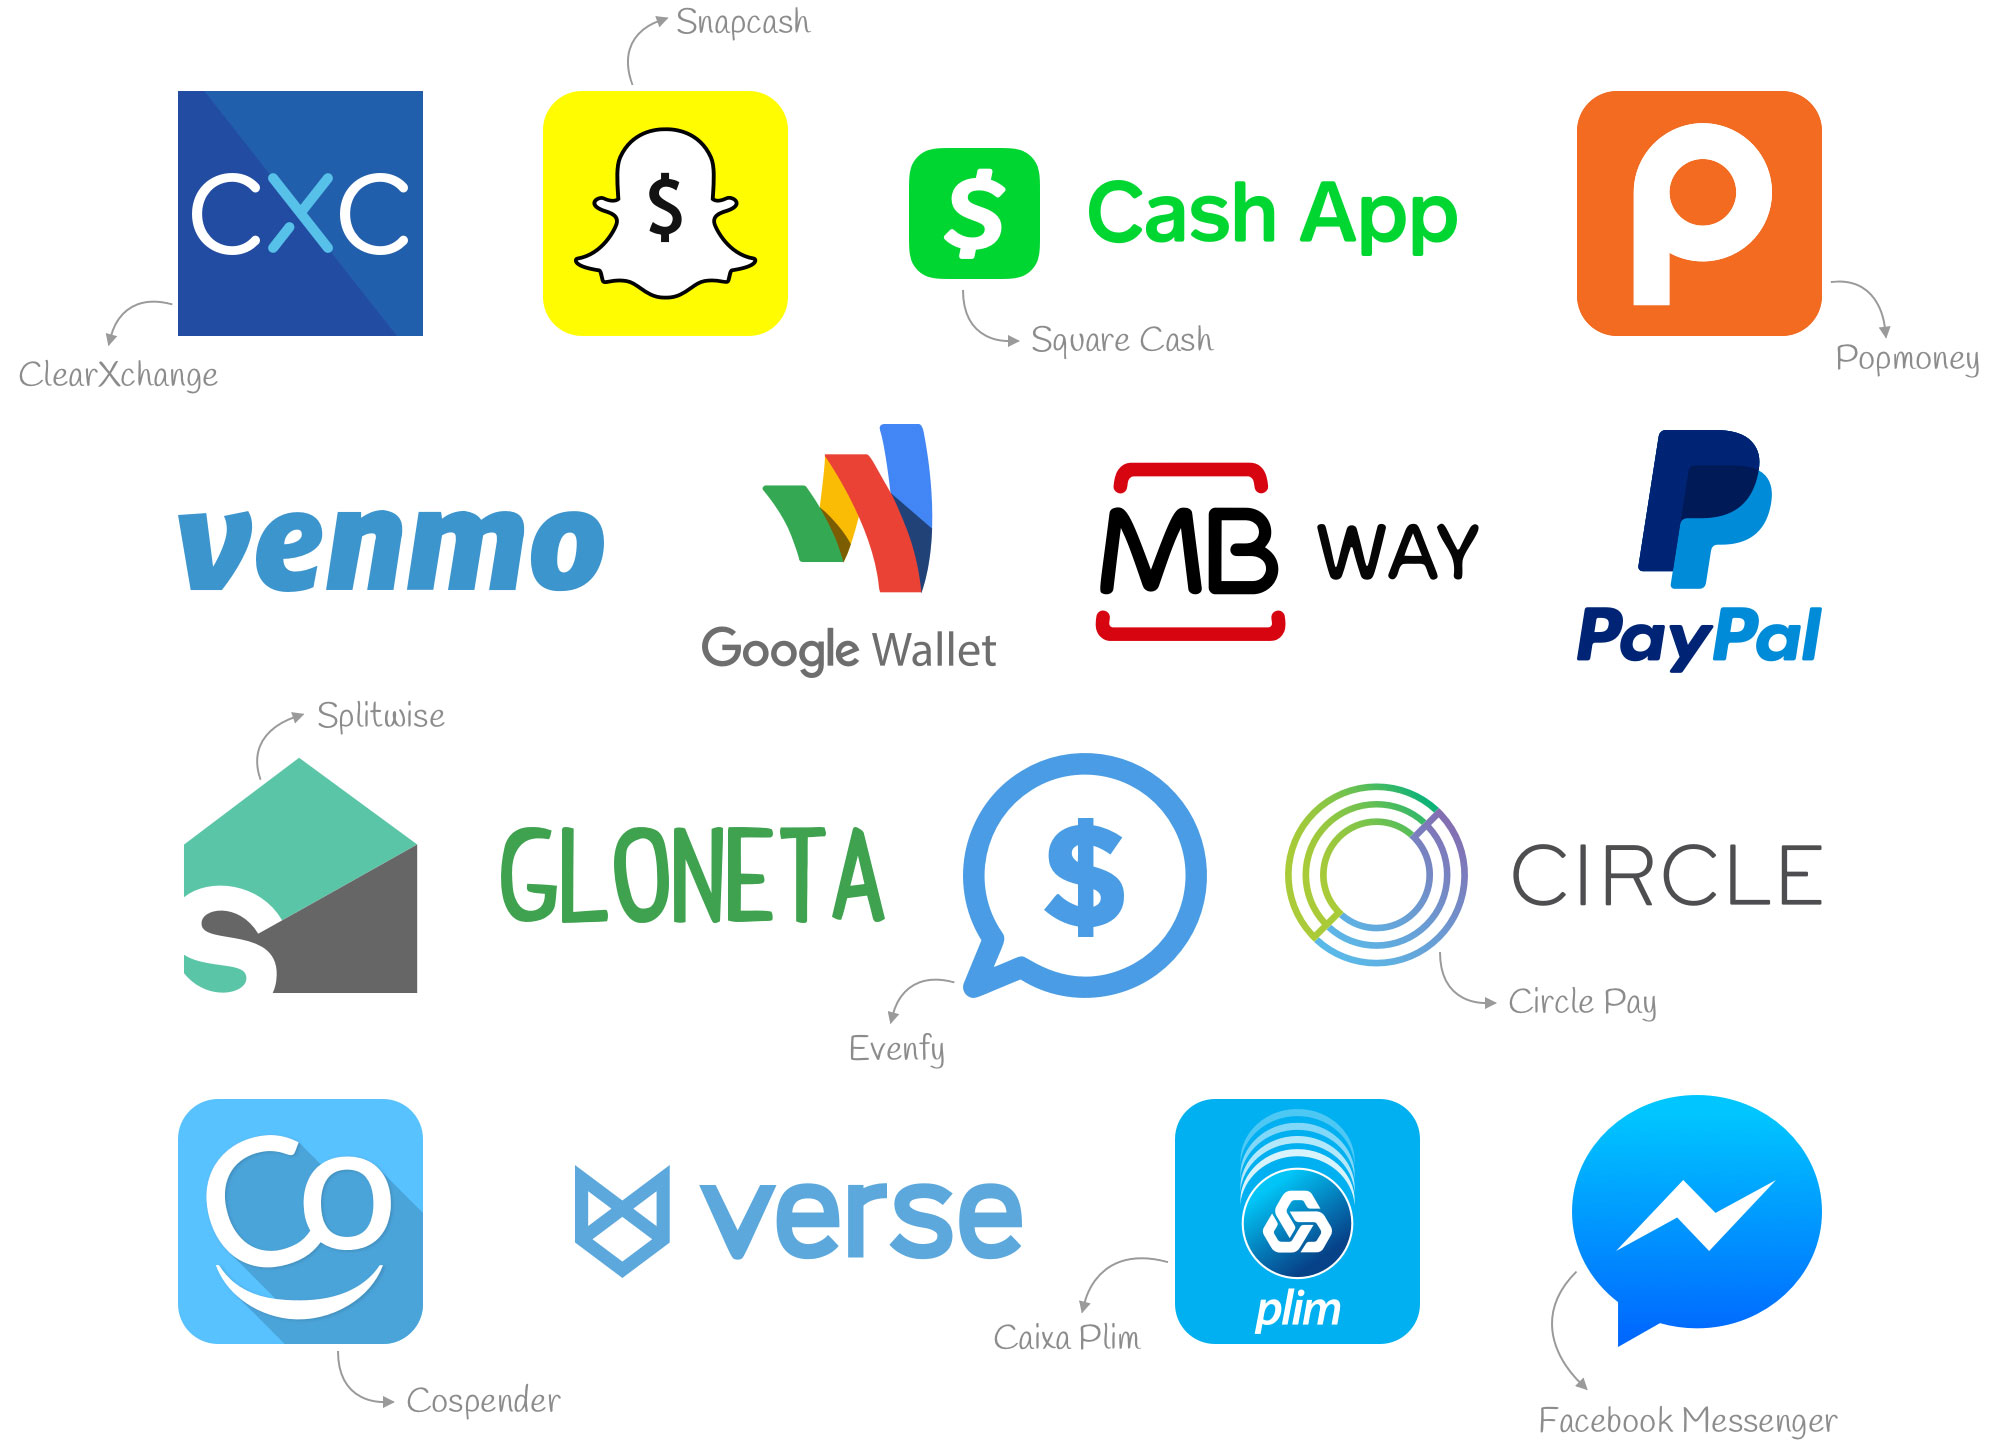 Benchmarking product's logos — ClearXchange, Snapcash, Square Cash, Popmoney, Venmo, Google Wallet, MB WAY, PayPal, Splitwise, Gloneta, Evenfy, Circle Pay, Cospender, Verse, Caixa Plim and Facebook Messenger